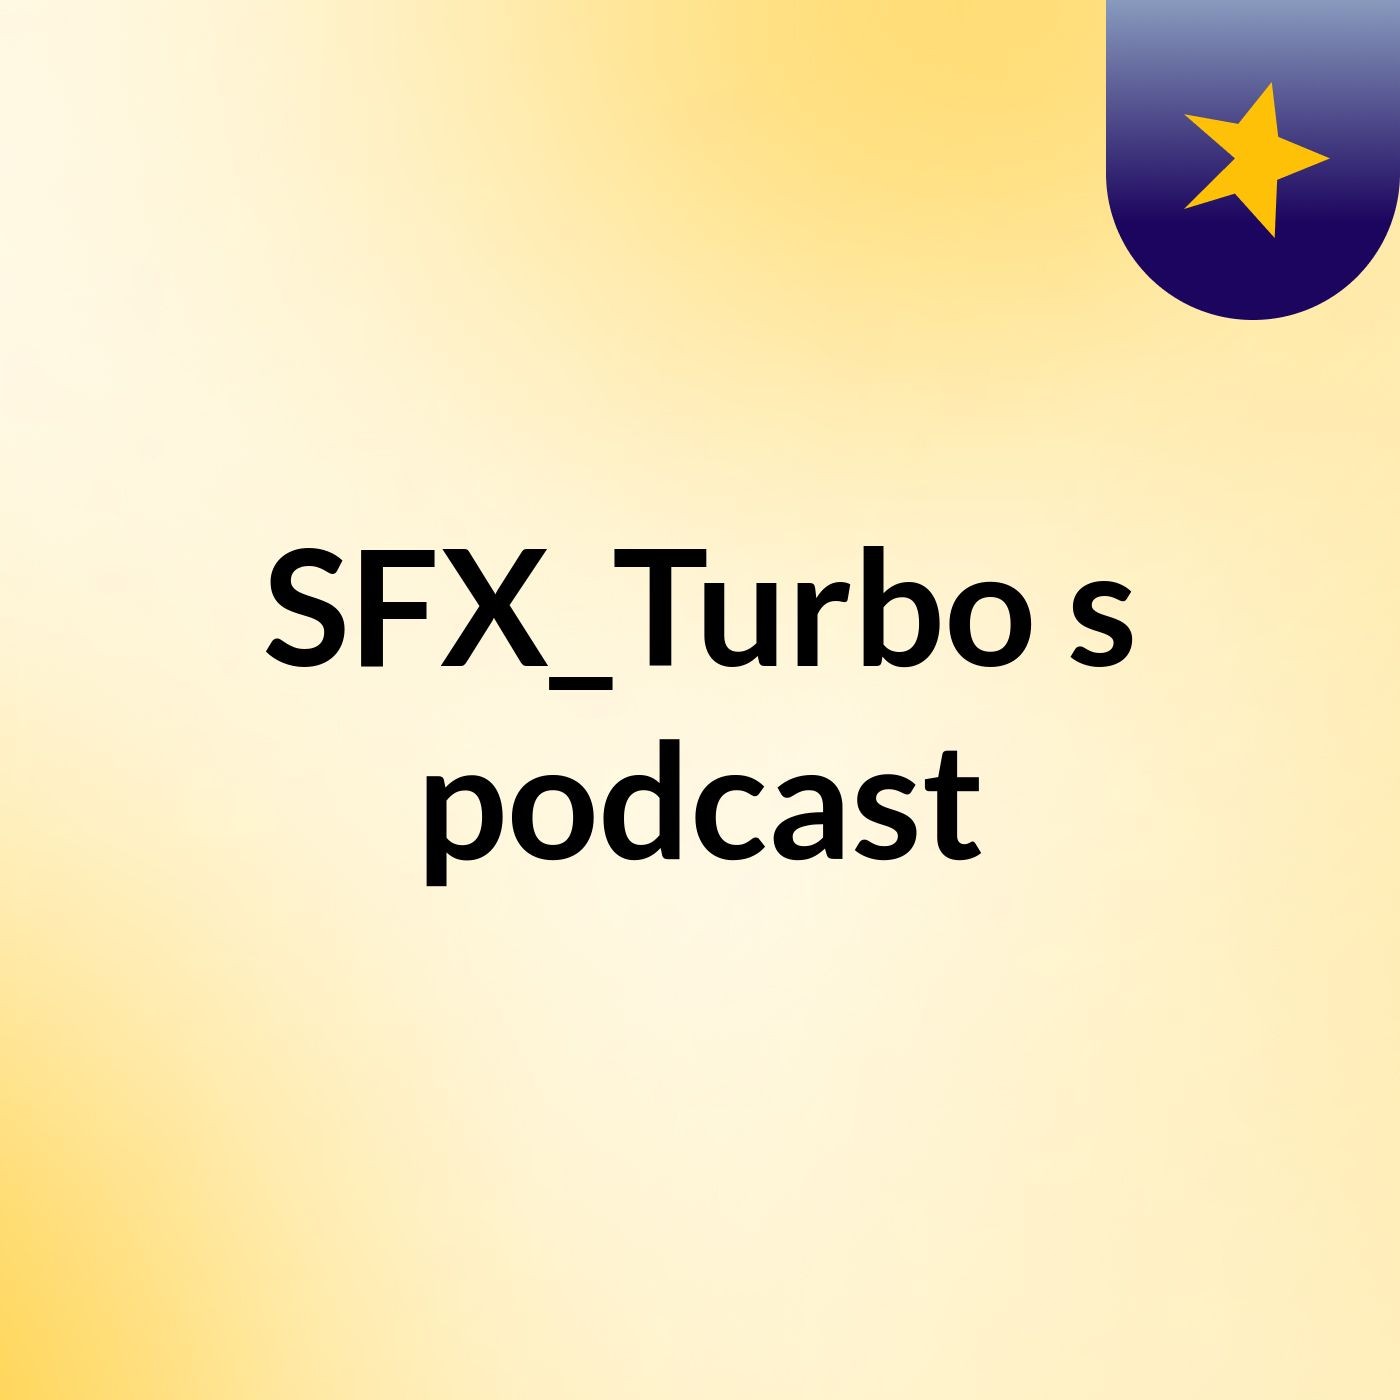 SFX_Turbo's podcast